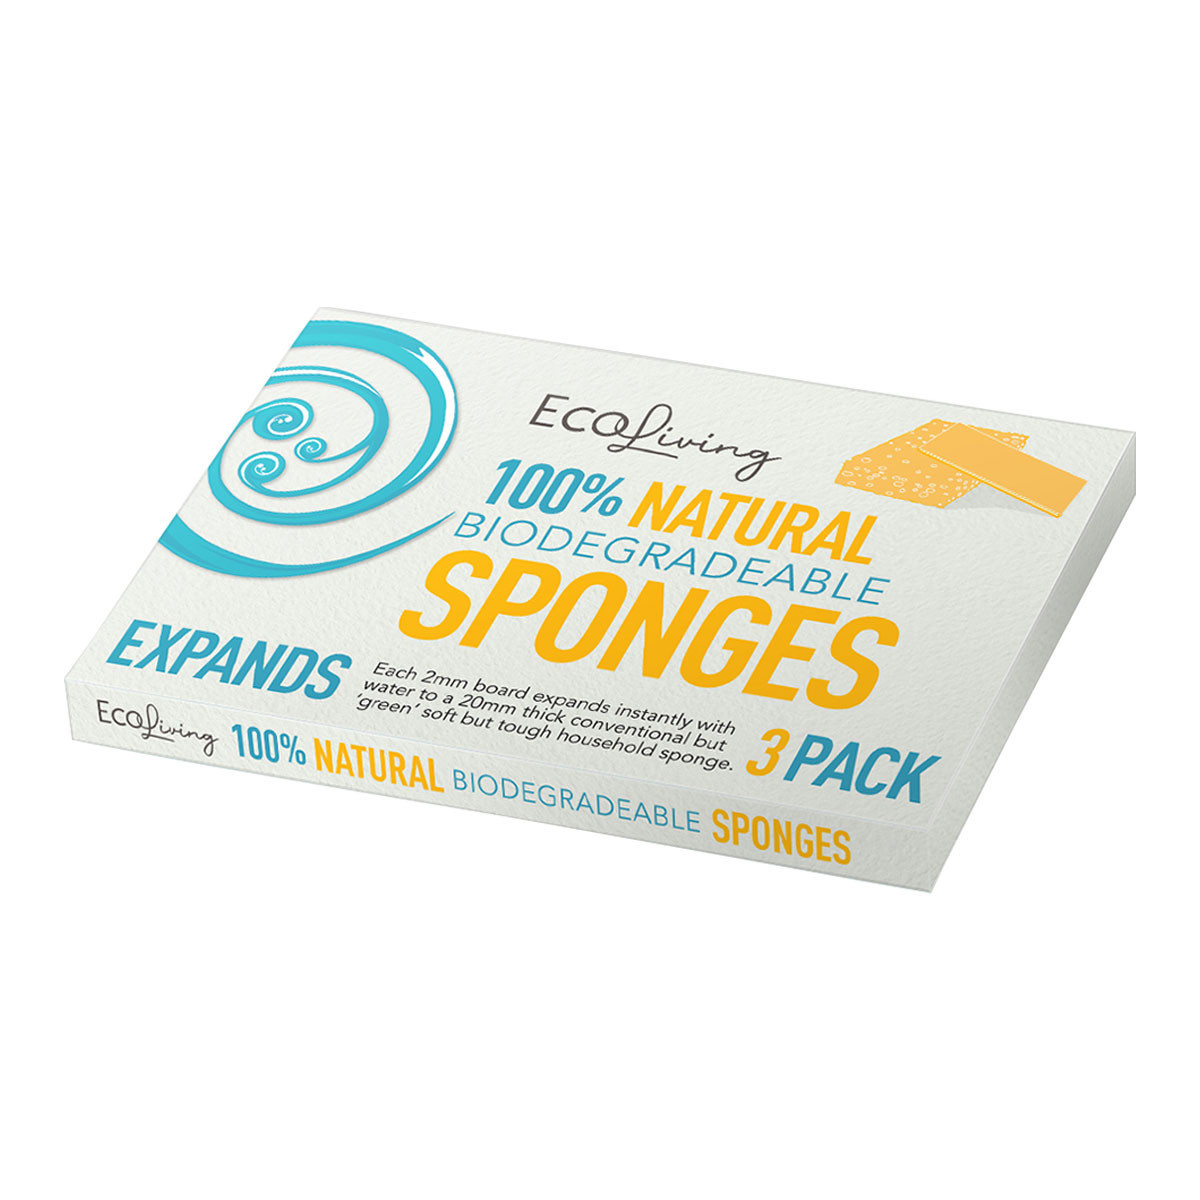 https://cdn11.bigcommerce.com/s-v7ajalirzz/images/stencil/original/products/15905/43592/ecoliving-100percent-natural-biodegradable-sponges__60007.1678166870.jpg?c=2